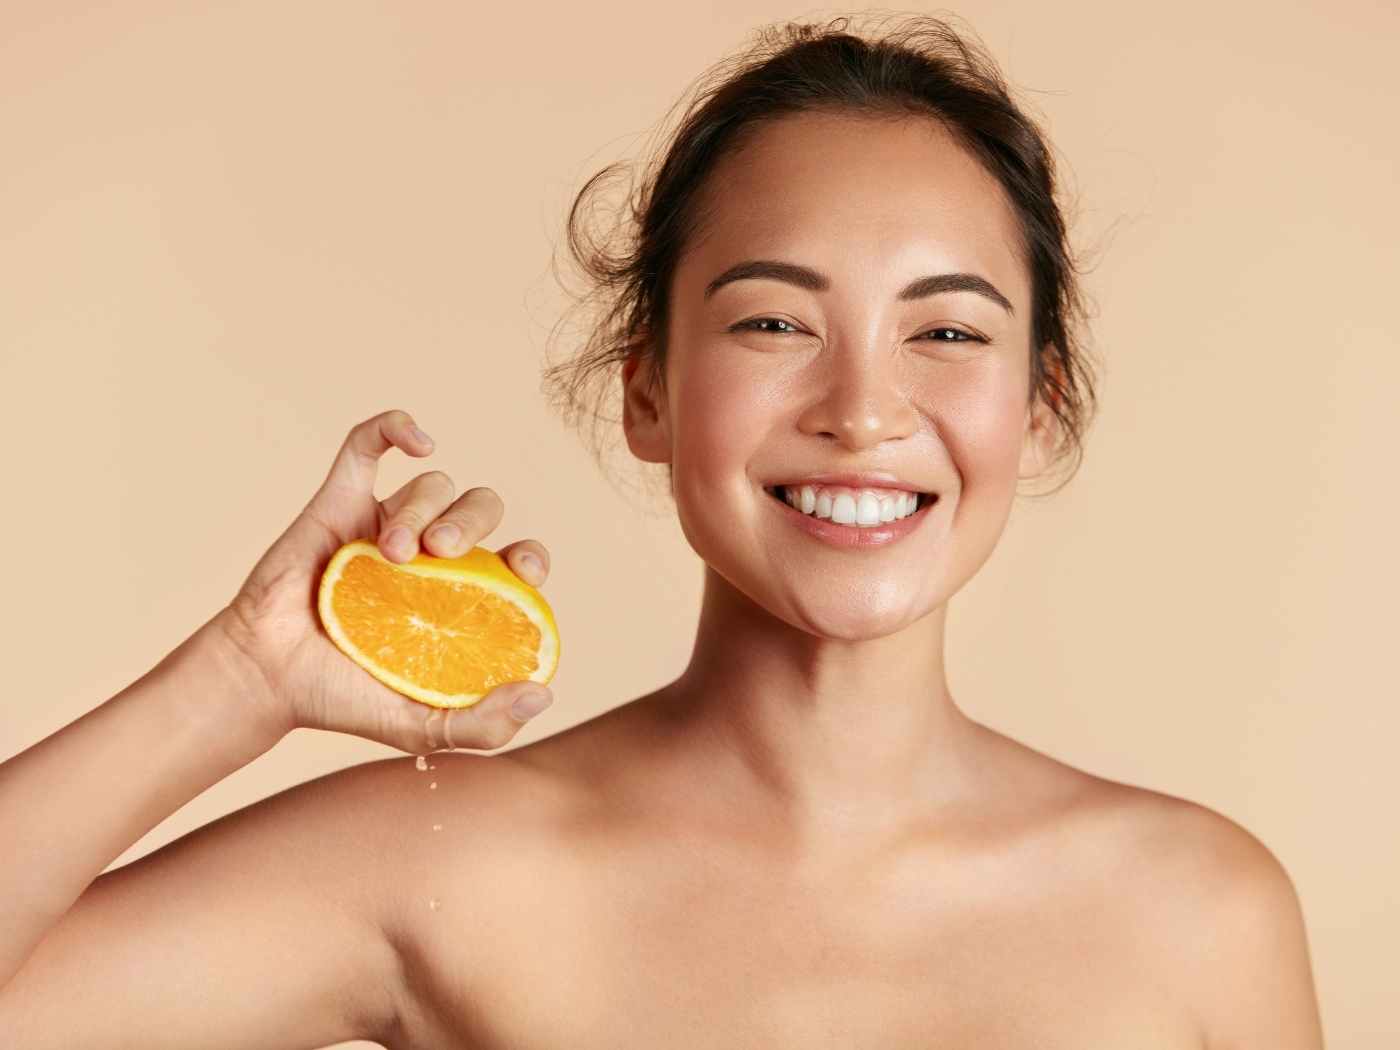 Woman Squeezing an Orange Smiling